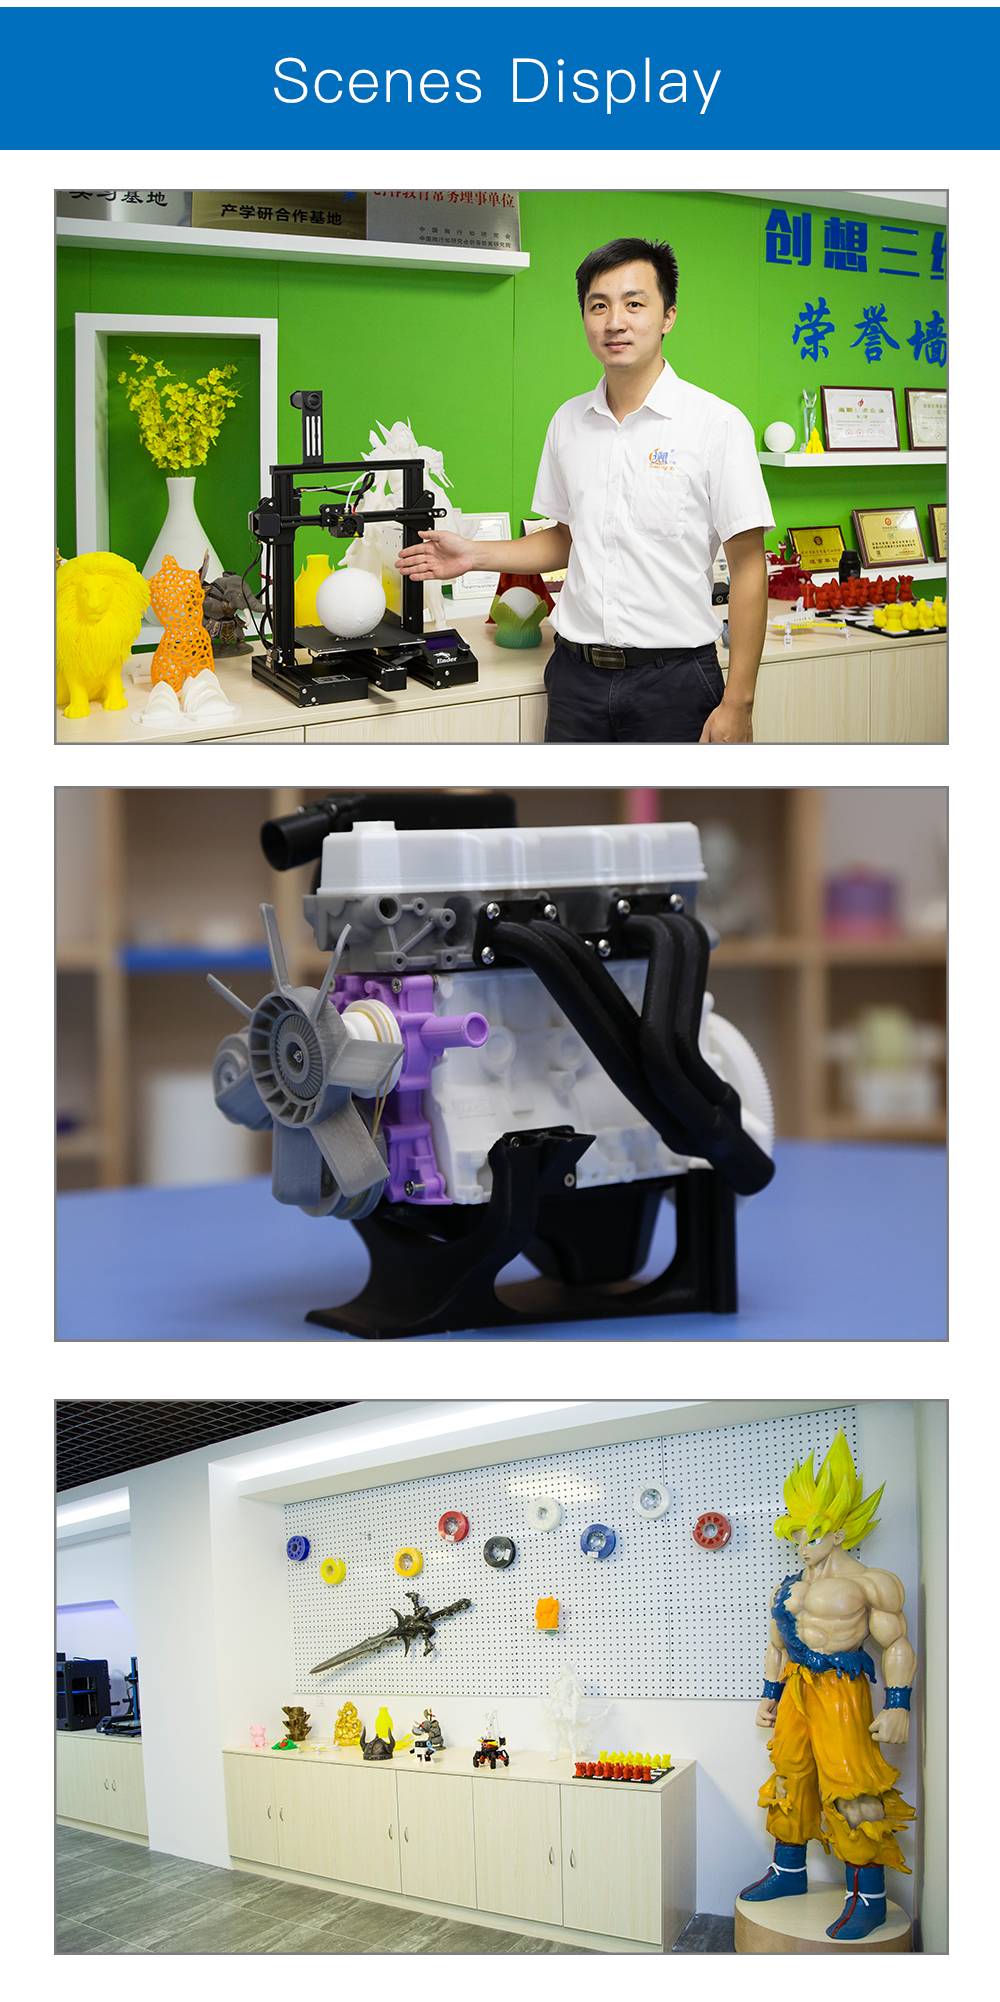 Creality 3D® Ender-3 Pro V-slot Prusa I3 DIY 3D Printer 220x220x250mm Printing Size With Magnetic Removable Platform Sticker/Power Resume Function/Off-line Print/Patent MK10 Extruder/Simple Leveling 13